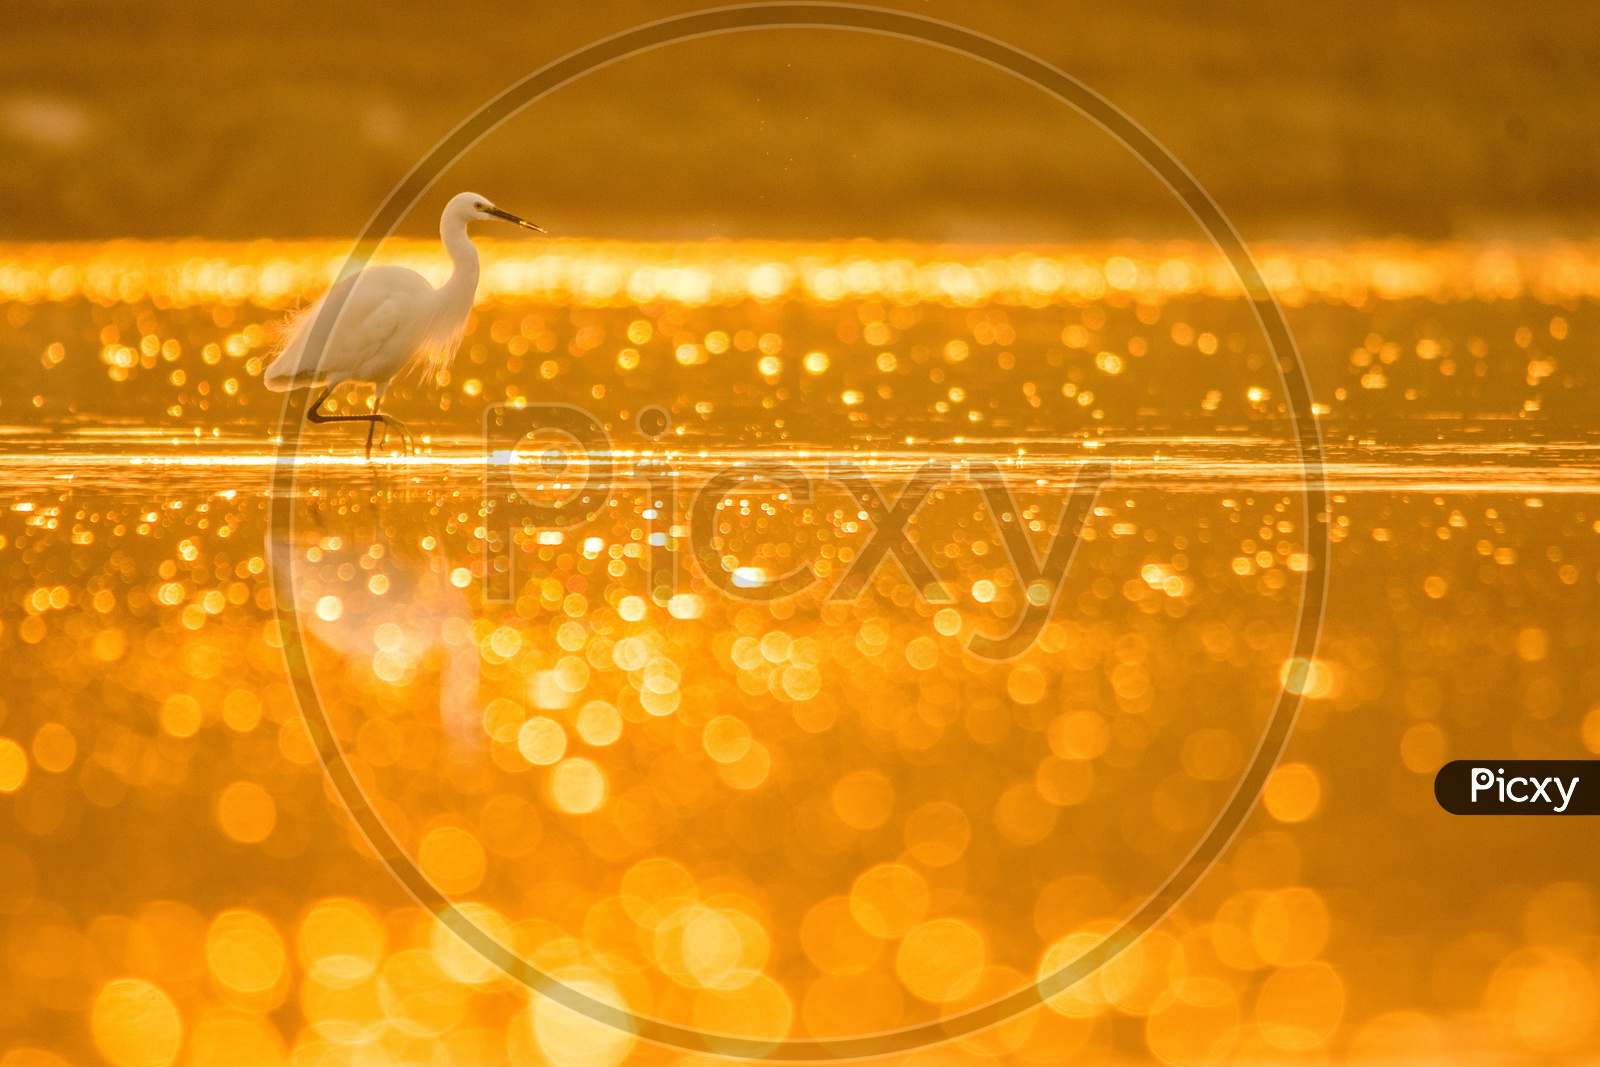 Little Egret, in golden hour